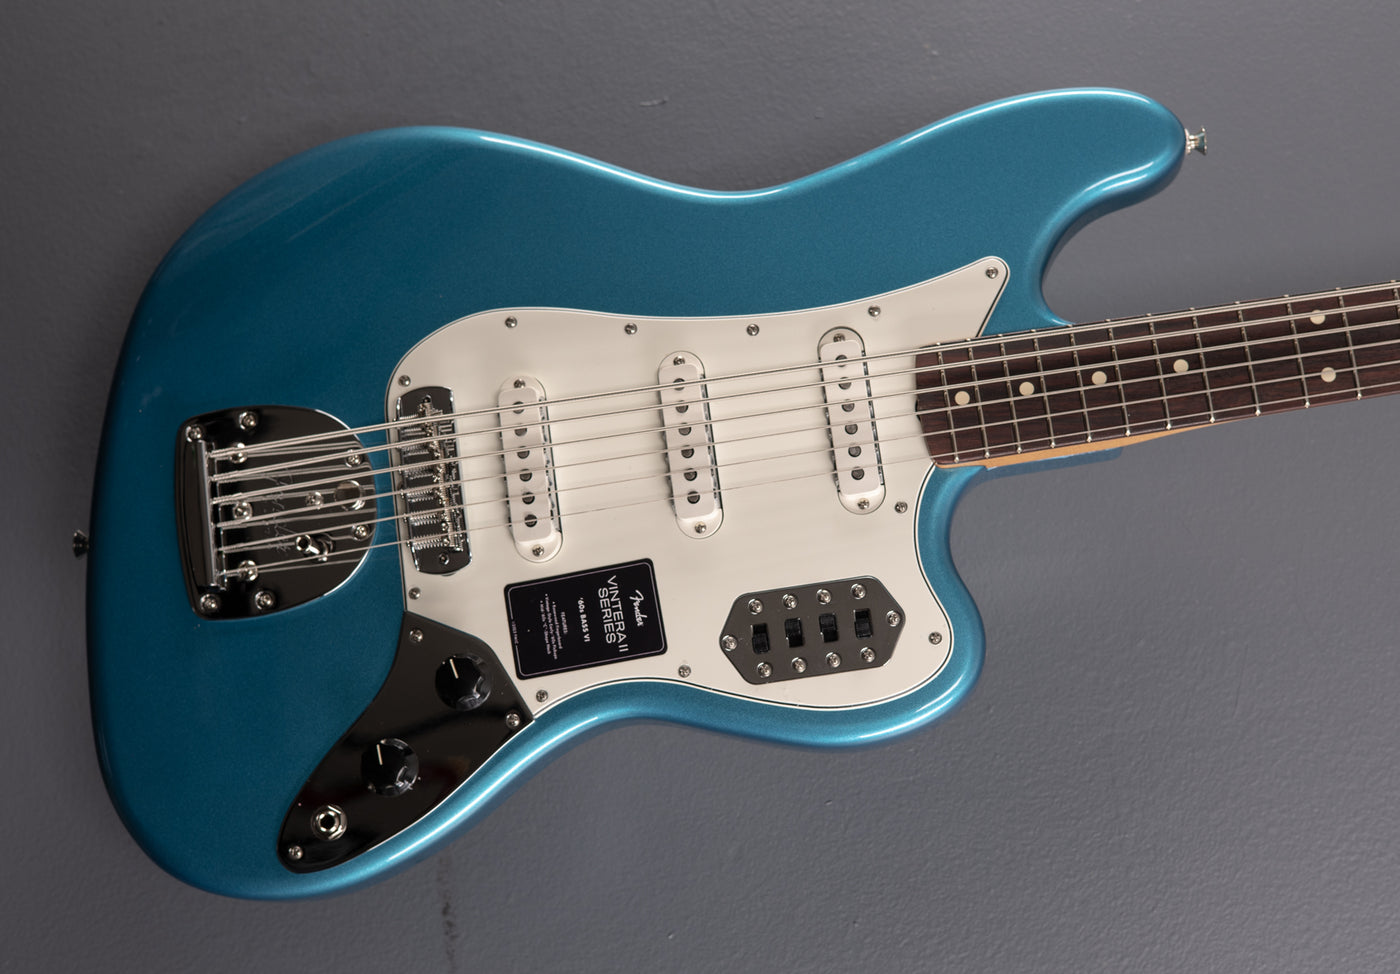 Vintera II '60s Bass VI - Lake Placid Blue